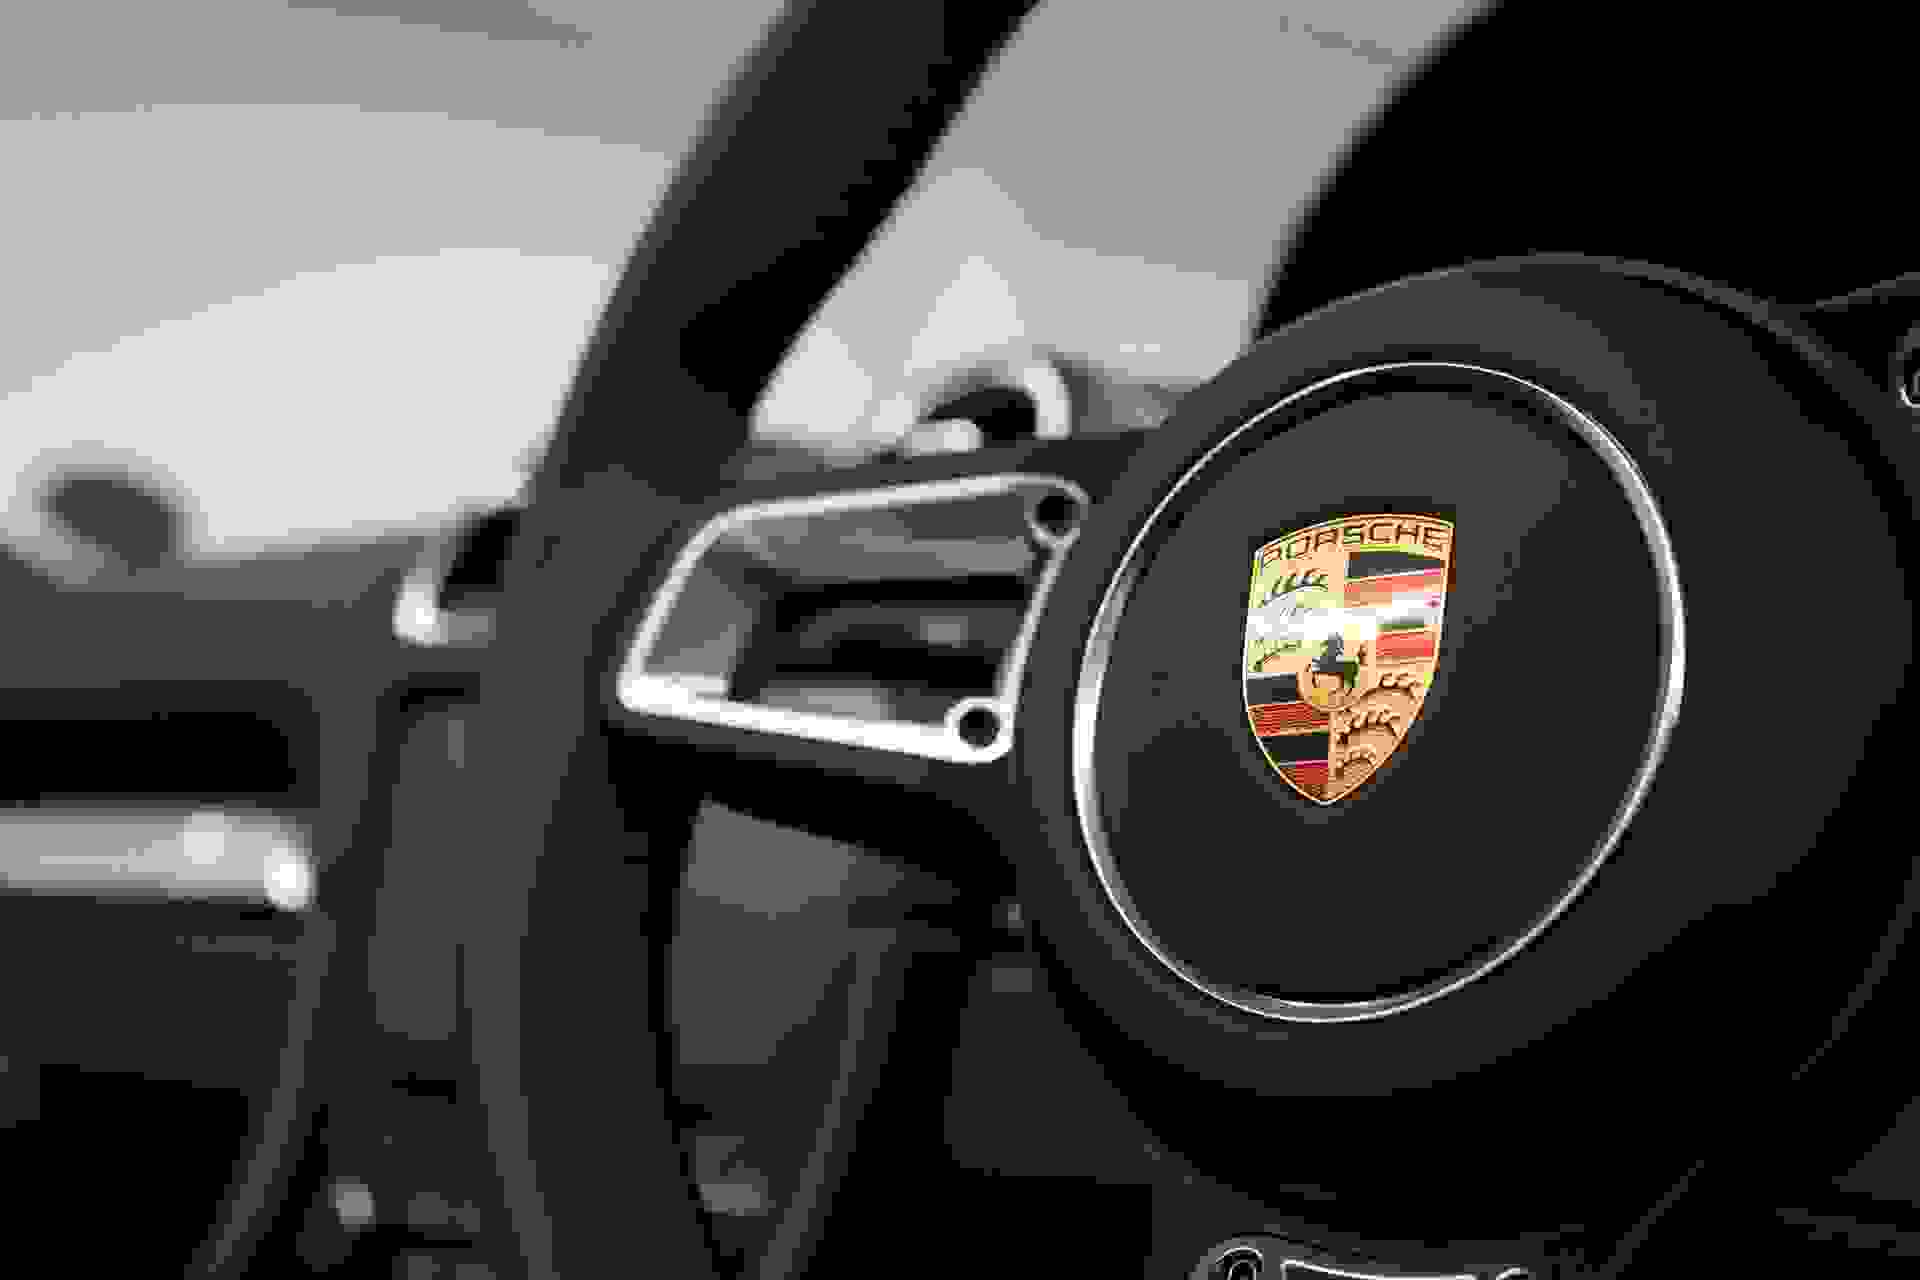 Porsche 718 Photo 5de247c1-c544-4aac-8ea2-fb84f643690a.jpg